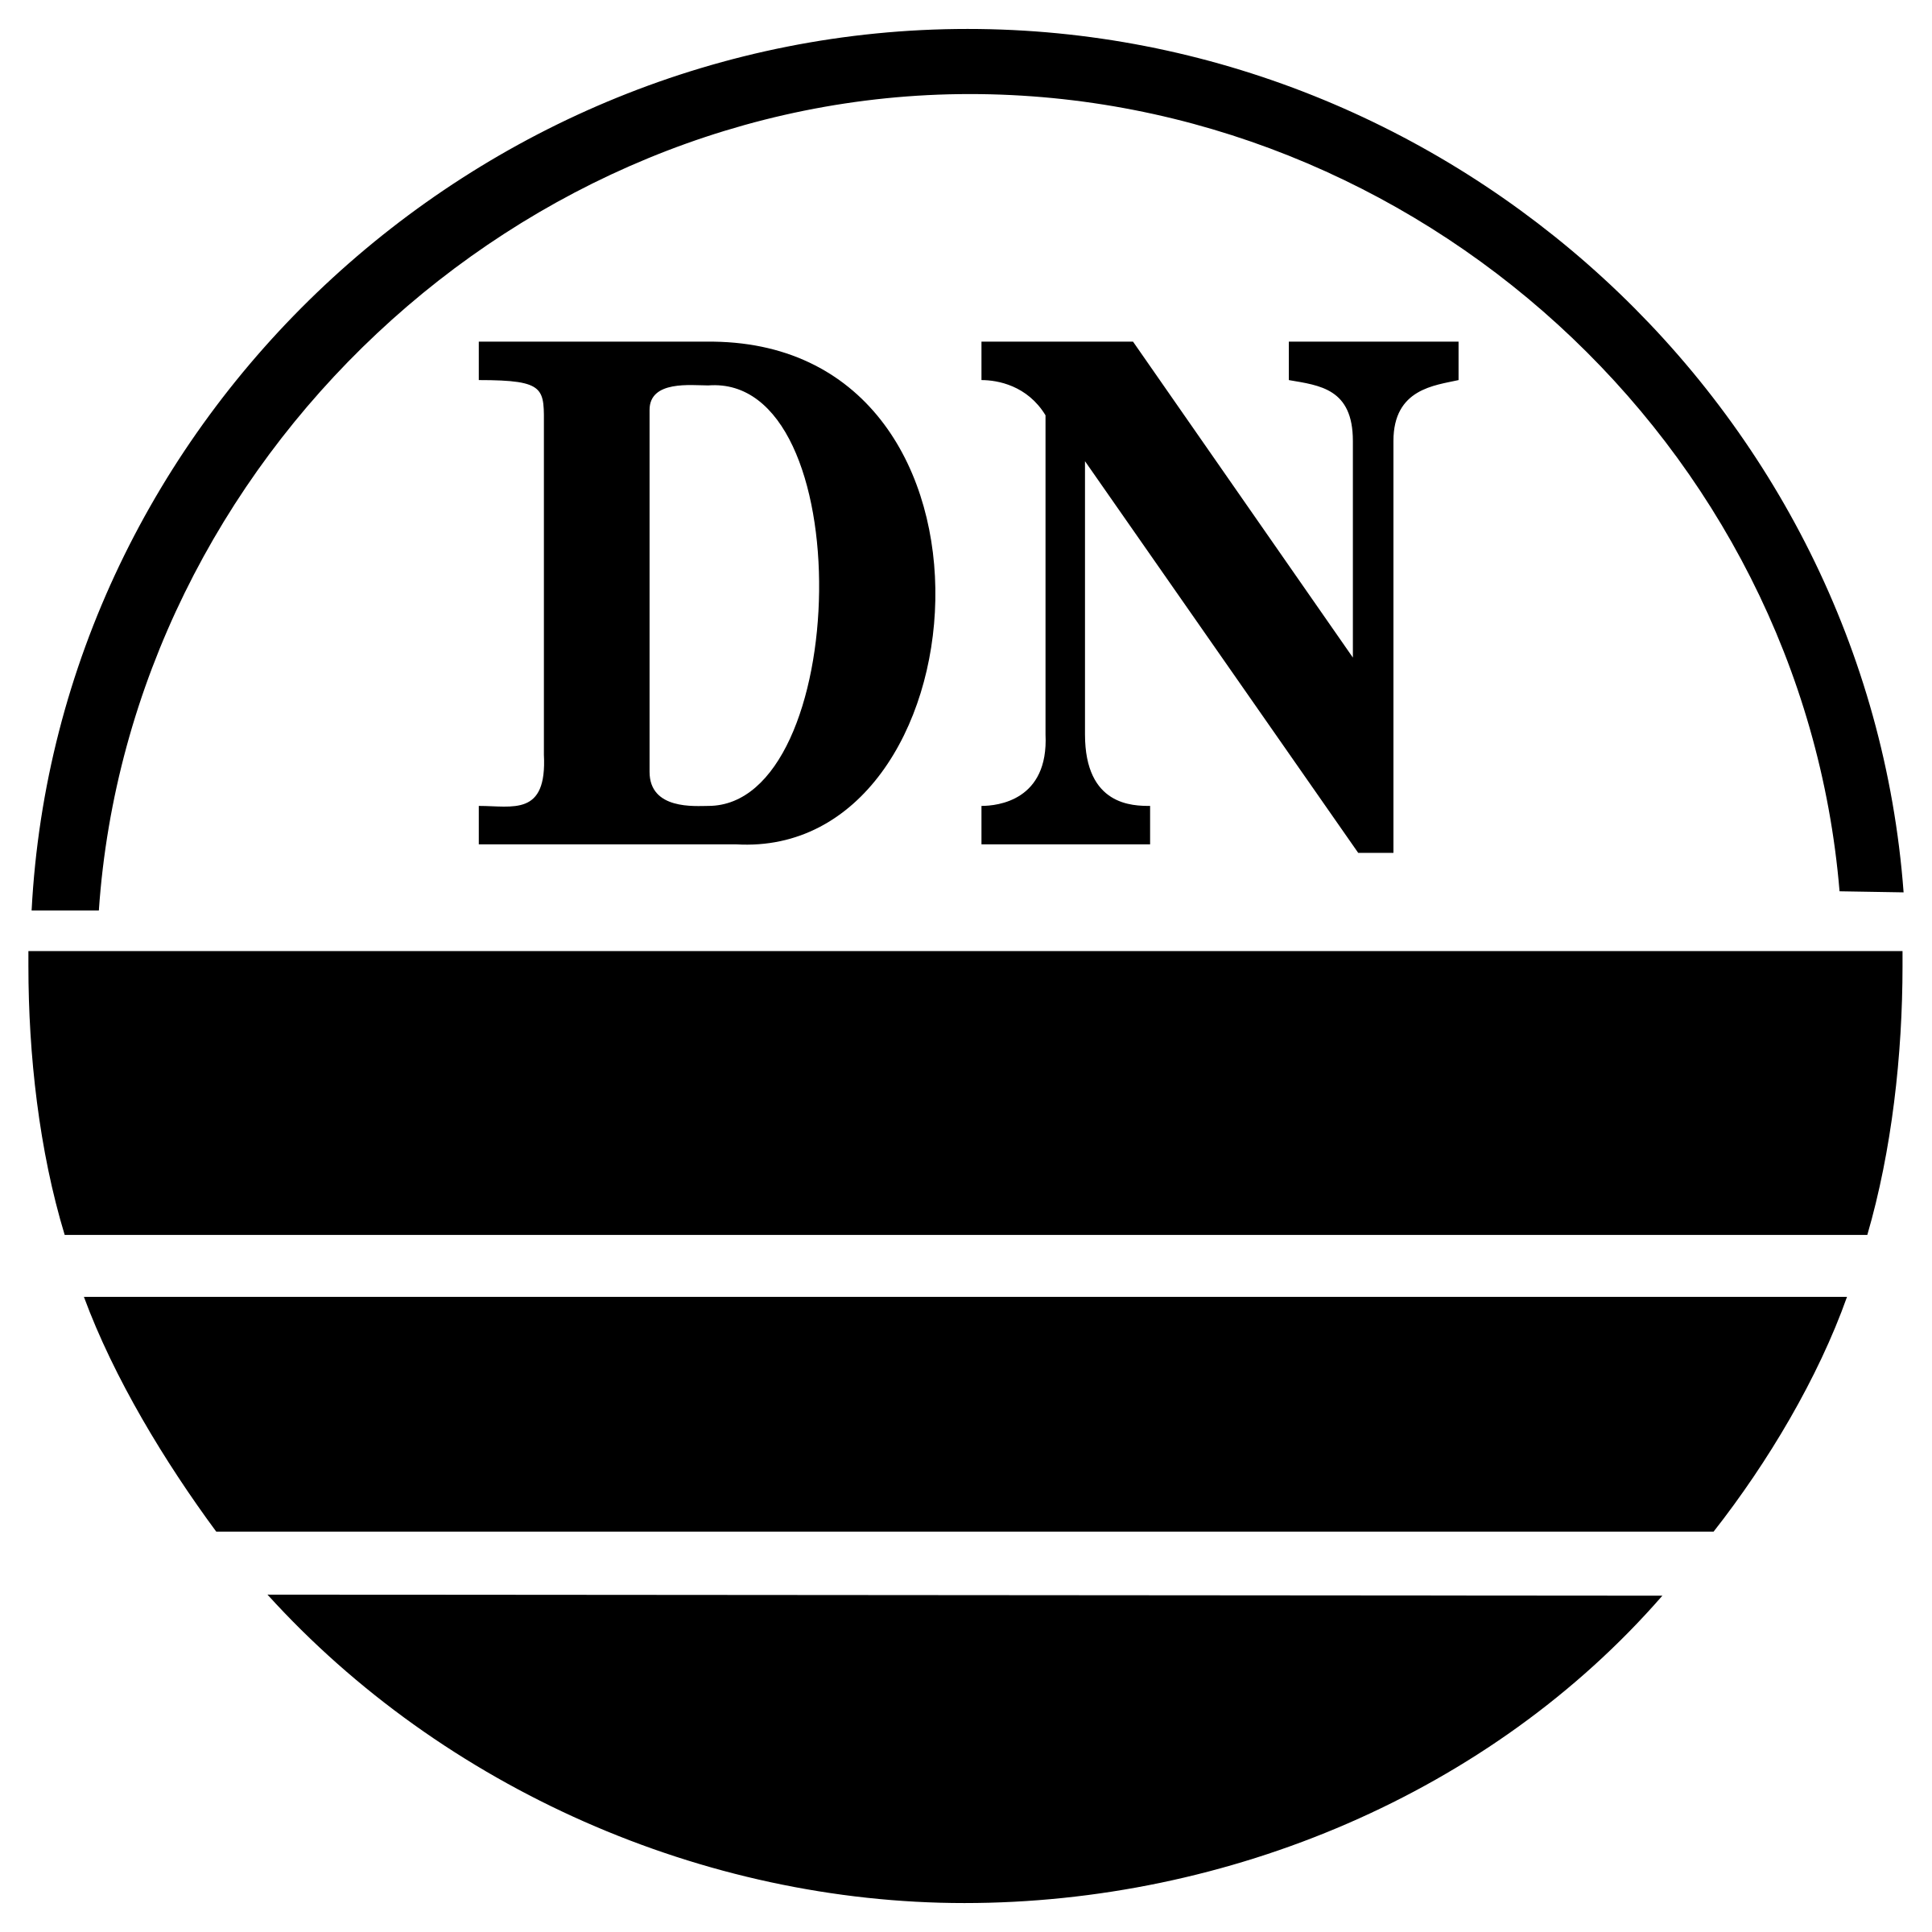 DN Logo - DN Logo PNG Transparent & SVG Vector - Freebie Supply